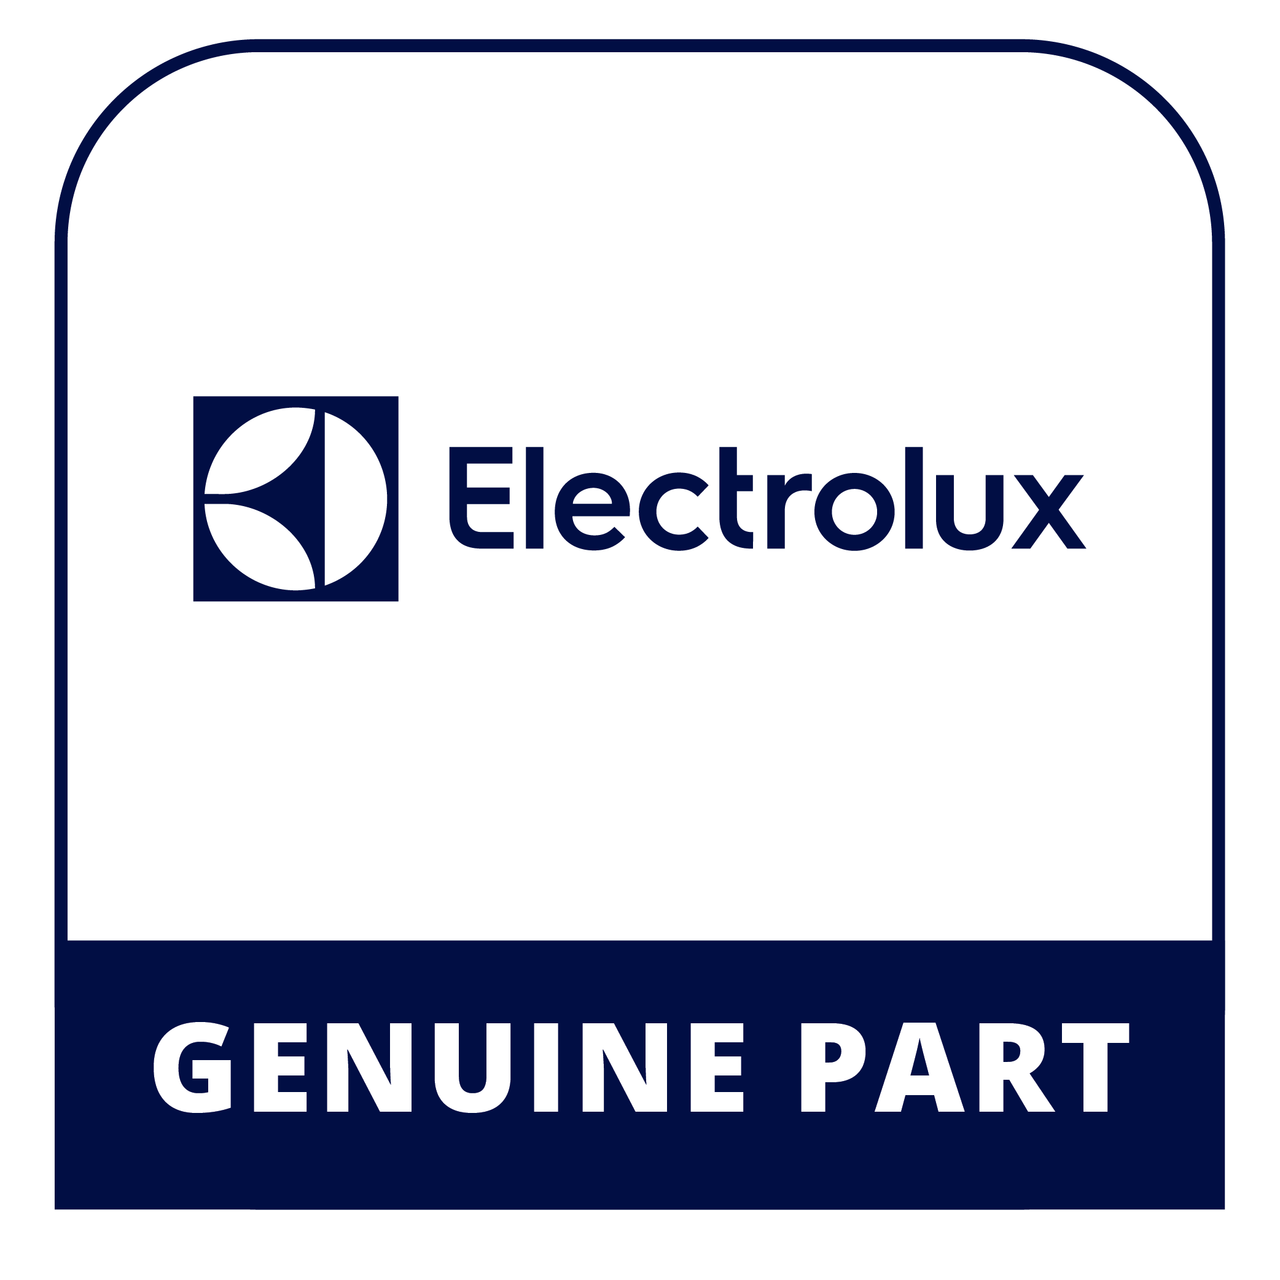 Frigidaire - Electrolux 356520607 Seal - Genuine Electrolux Part